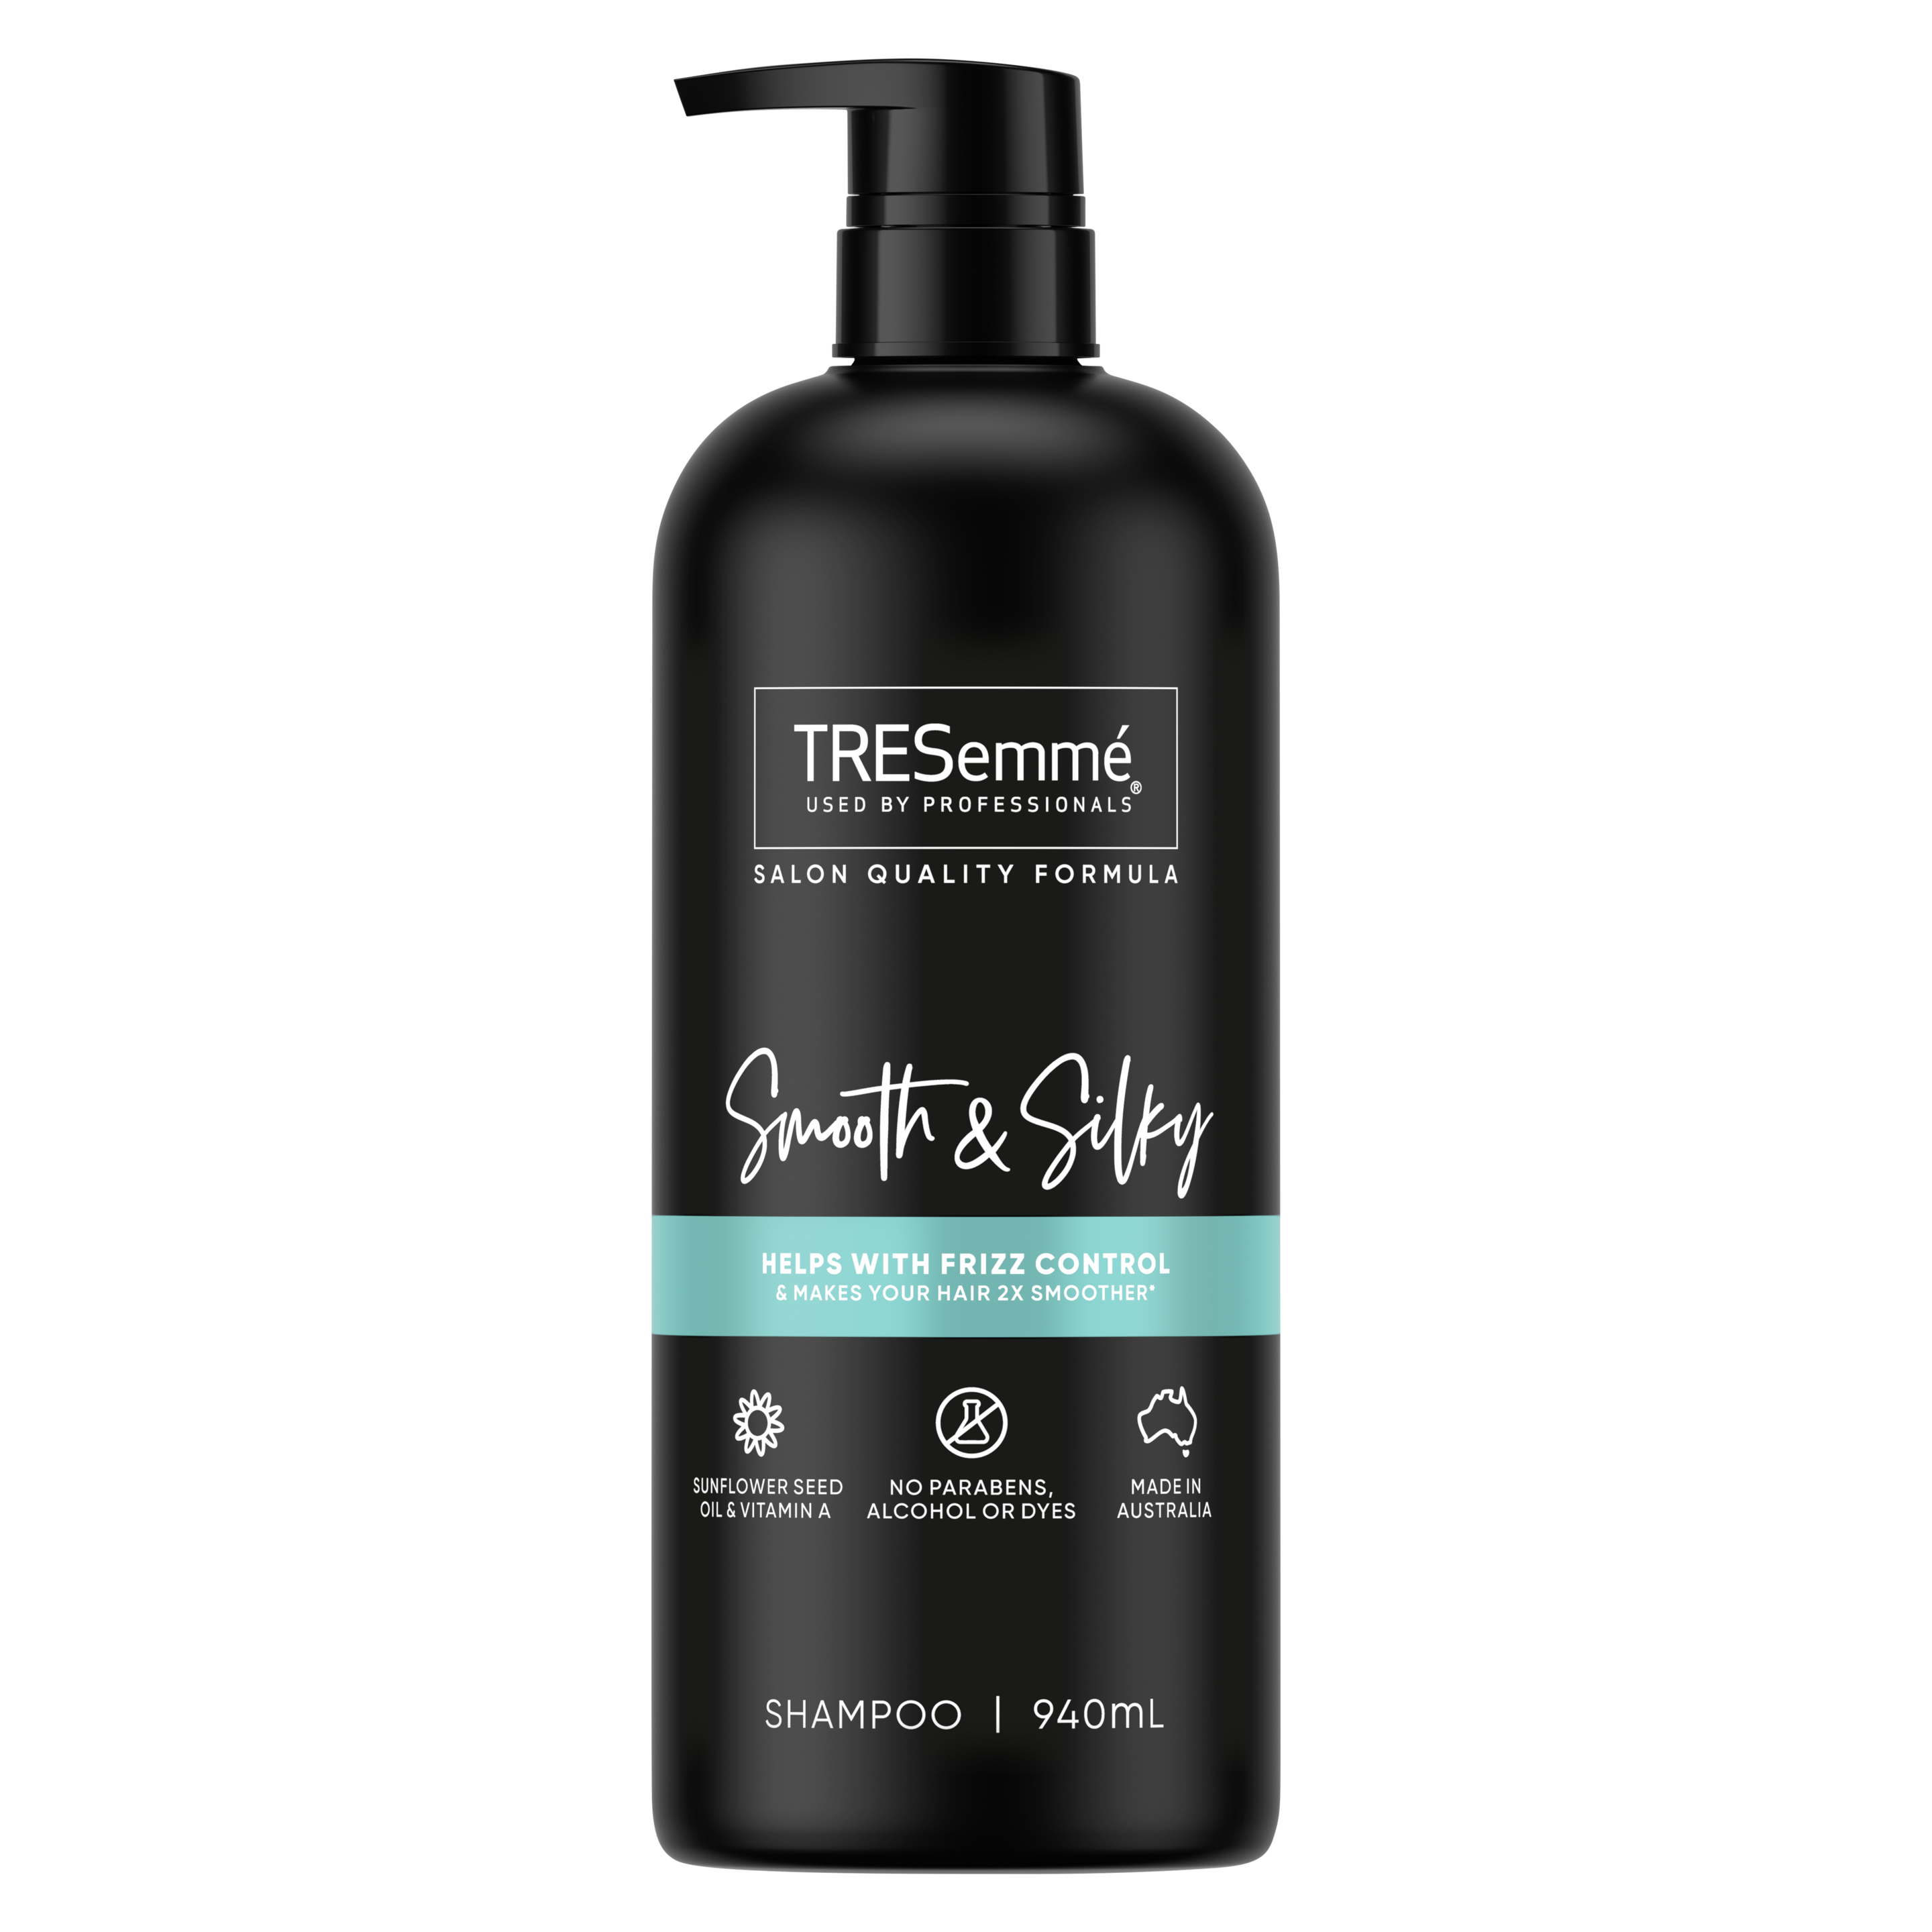 A 940ml bottle of TRESemmé Smooth & Silky Shampoo